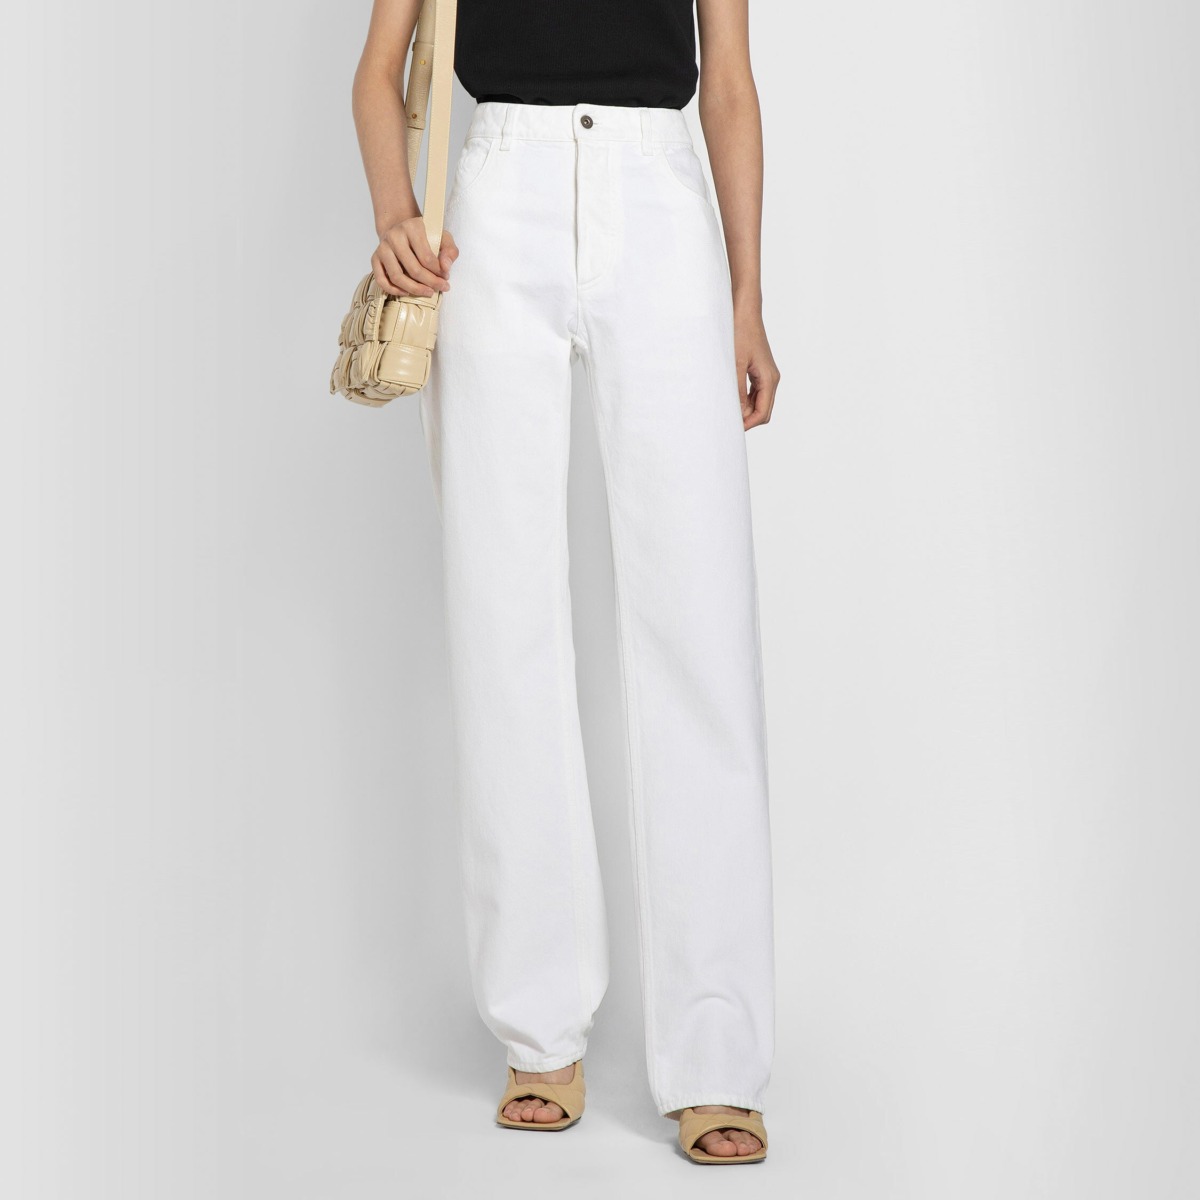 Jeans in White Bottega Veneta Woman - Antonioli GOOFASH